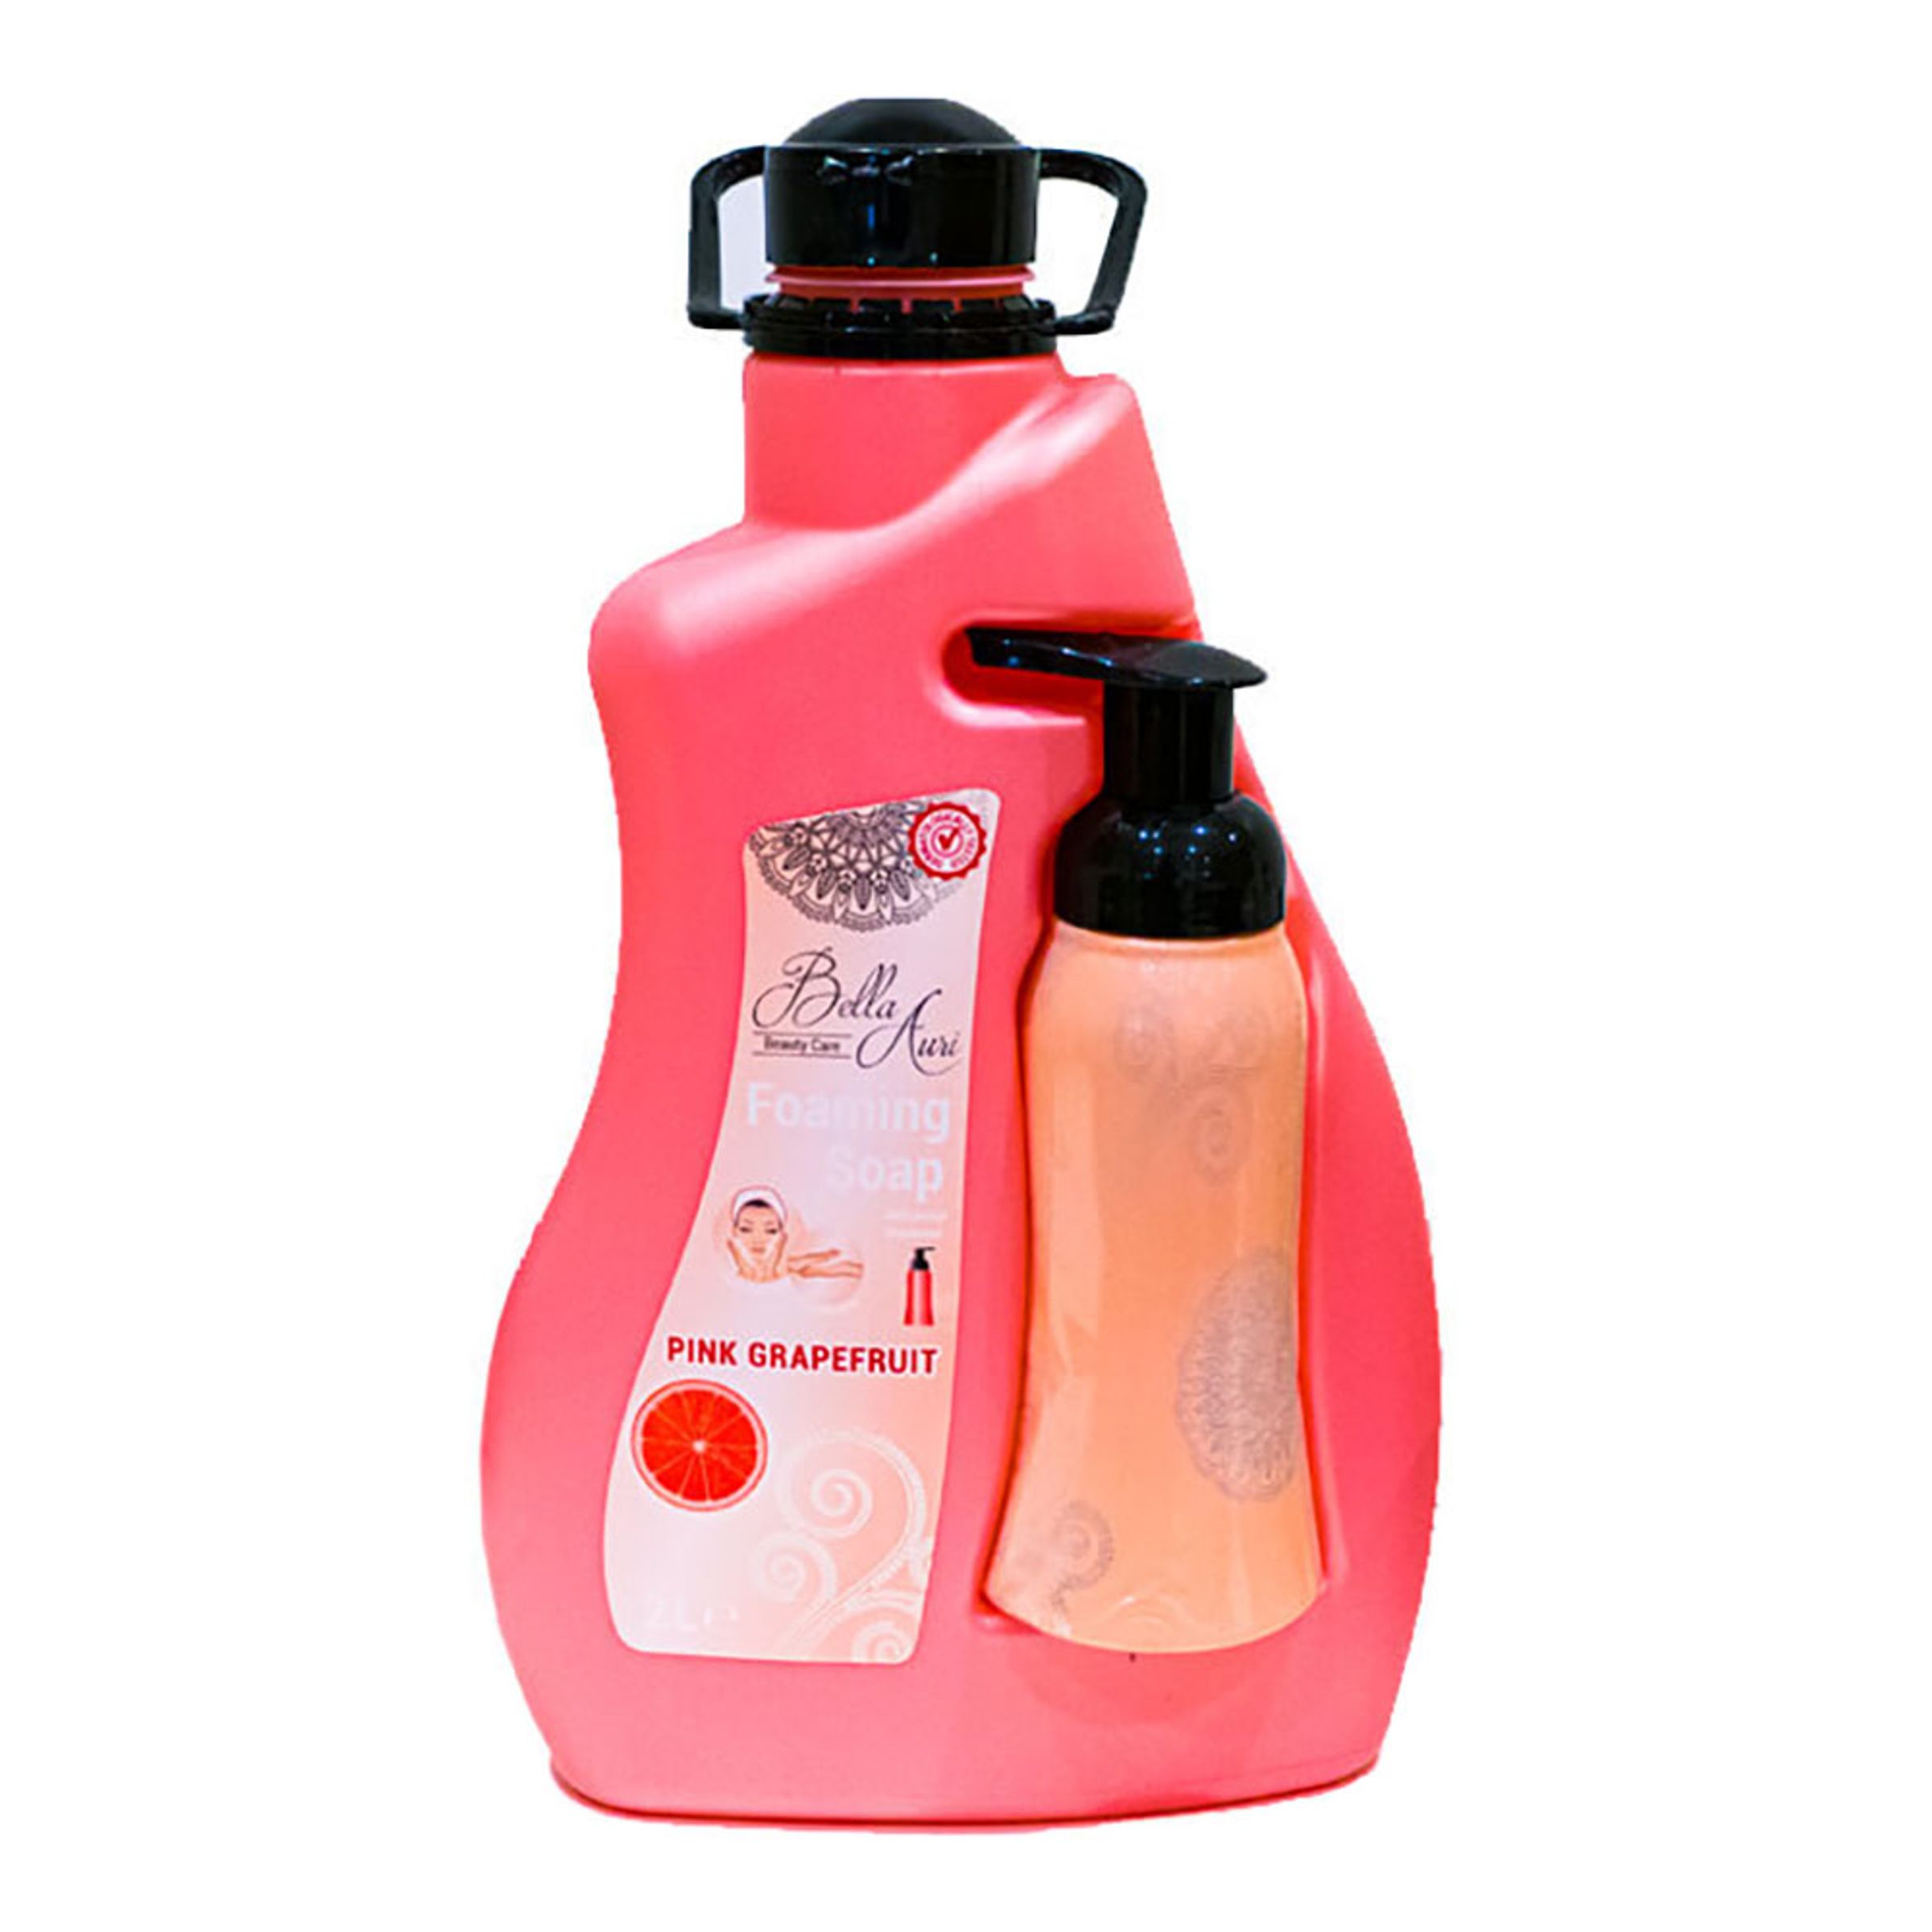 Foaming Soap Pink Grapefruit - 2 liter